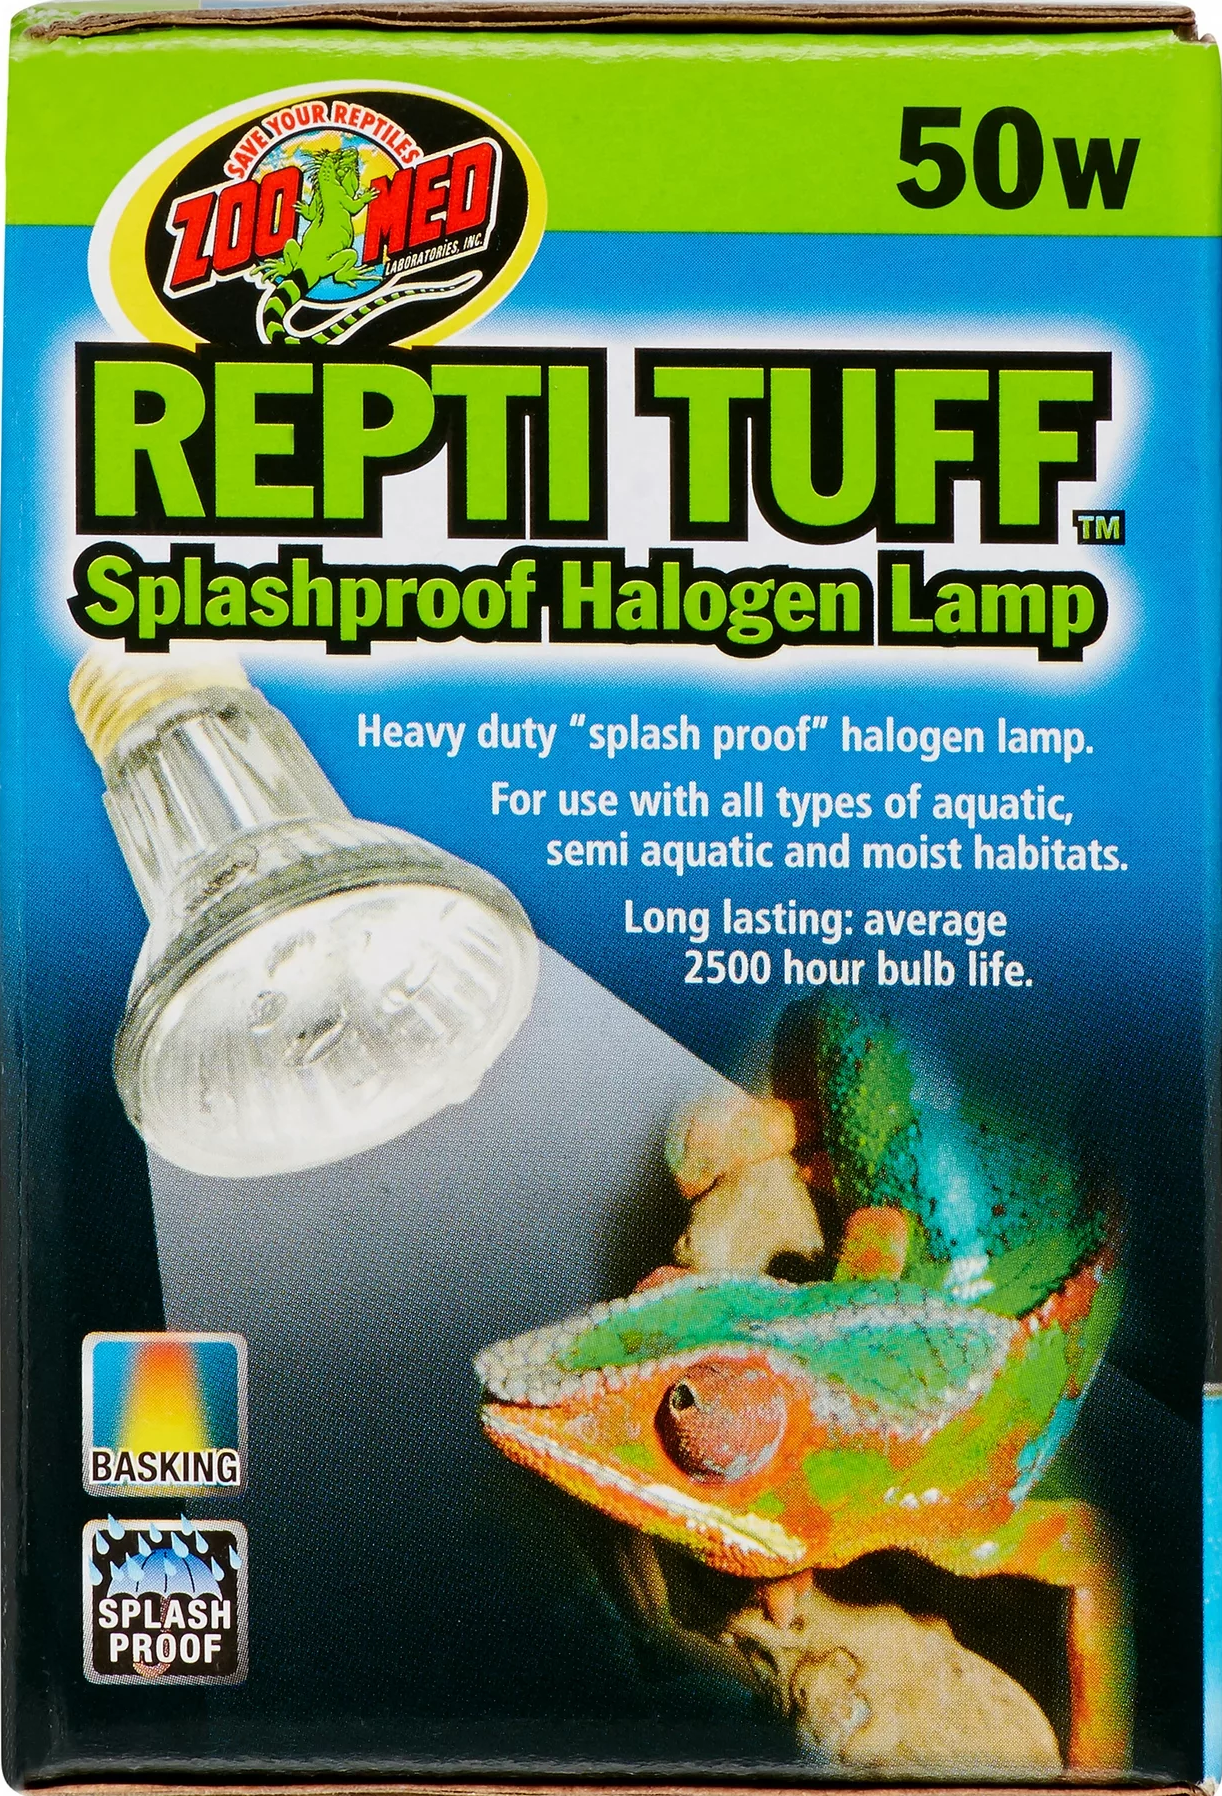 Halogen Repti Tuff Lamp wide range - splash proof